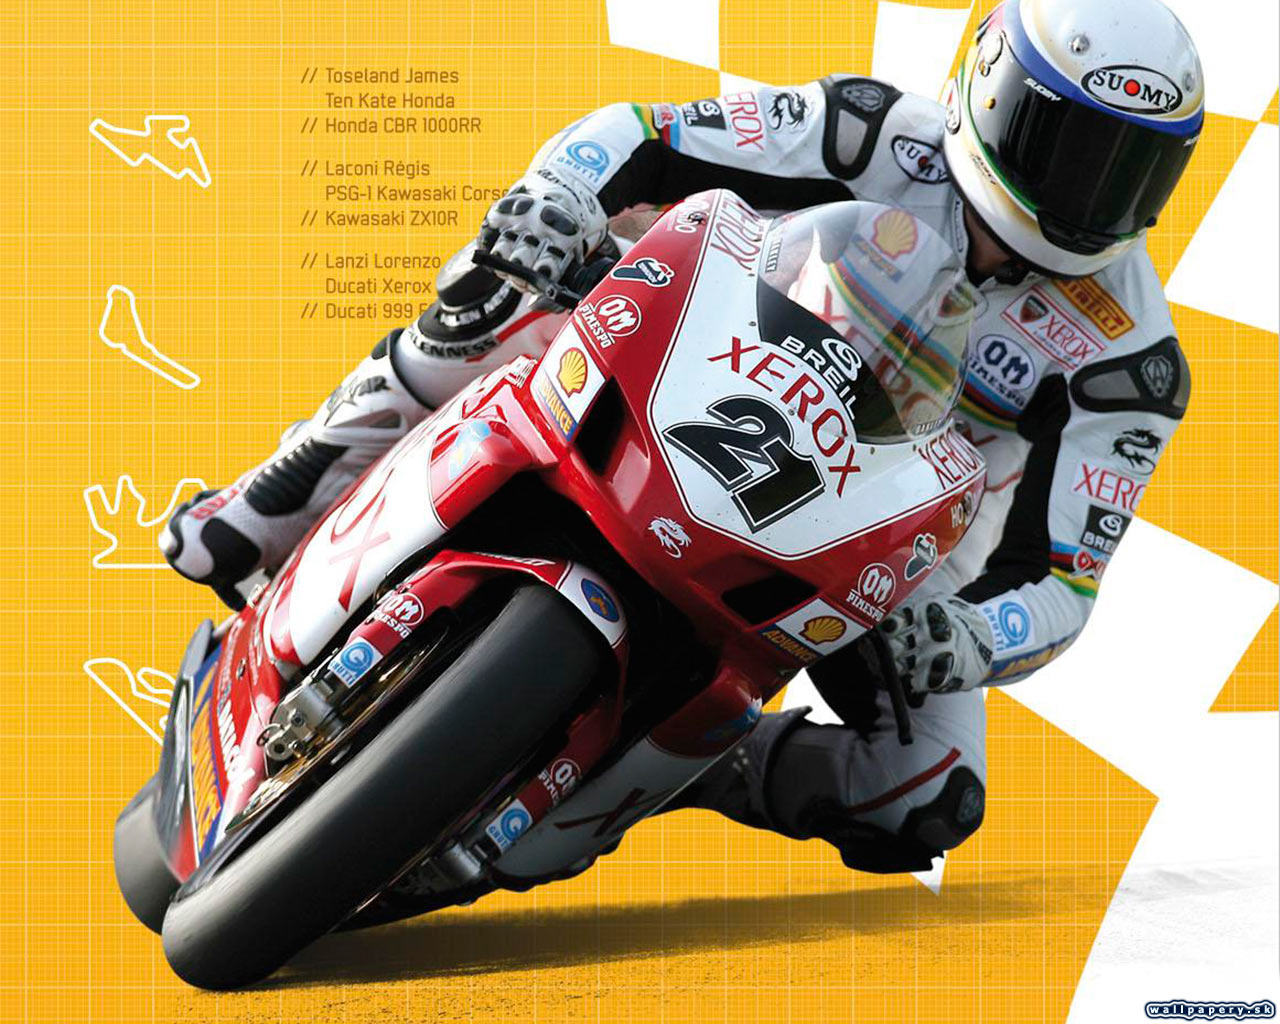 SBK-07: Superbike World Championship - wallpaper 10